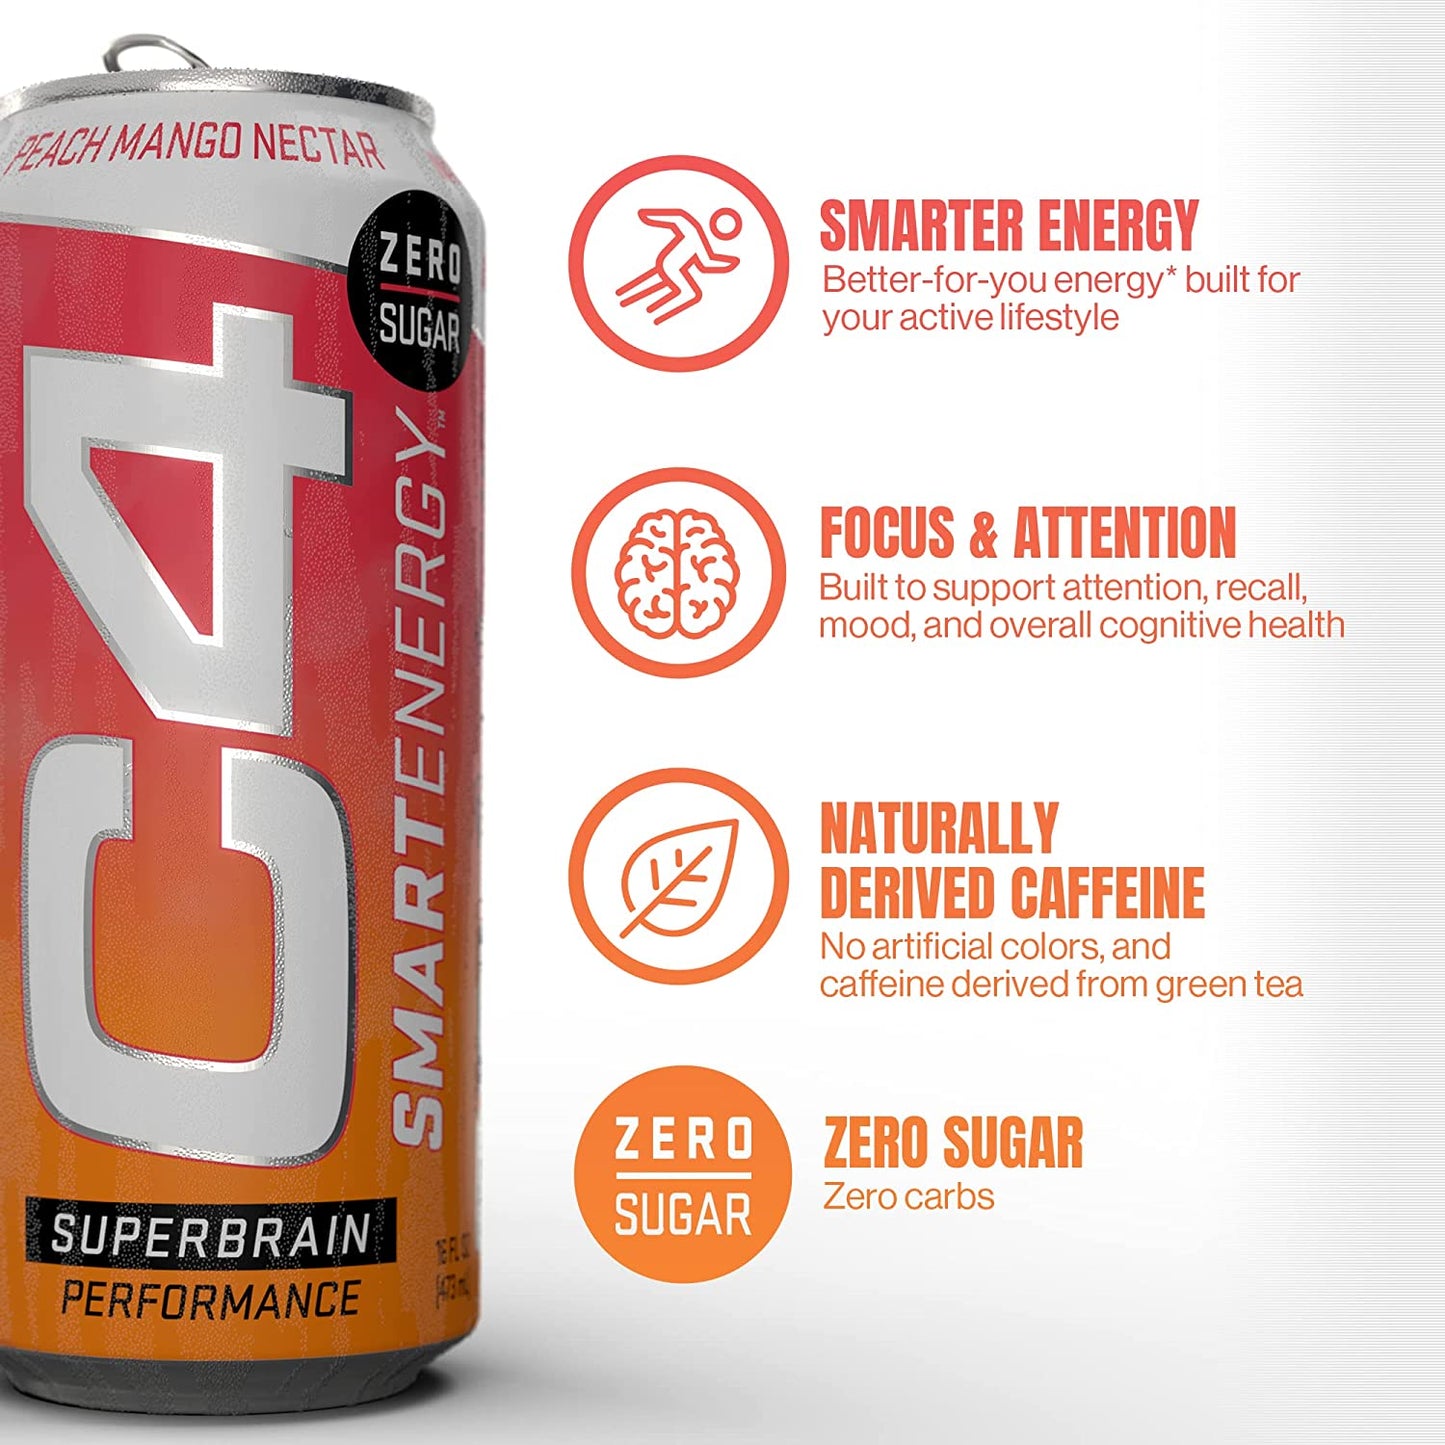 C4 Smart Energy Sugar Free Sparkling Energy Drink Peach Mango Nectar-473ml Pack of 12